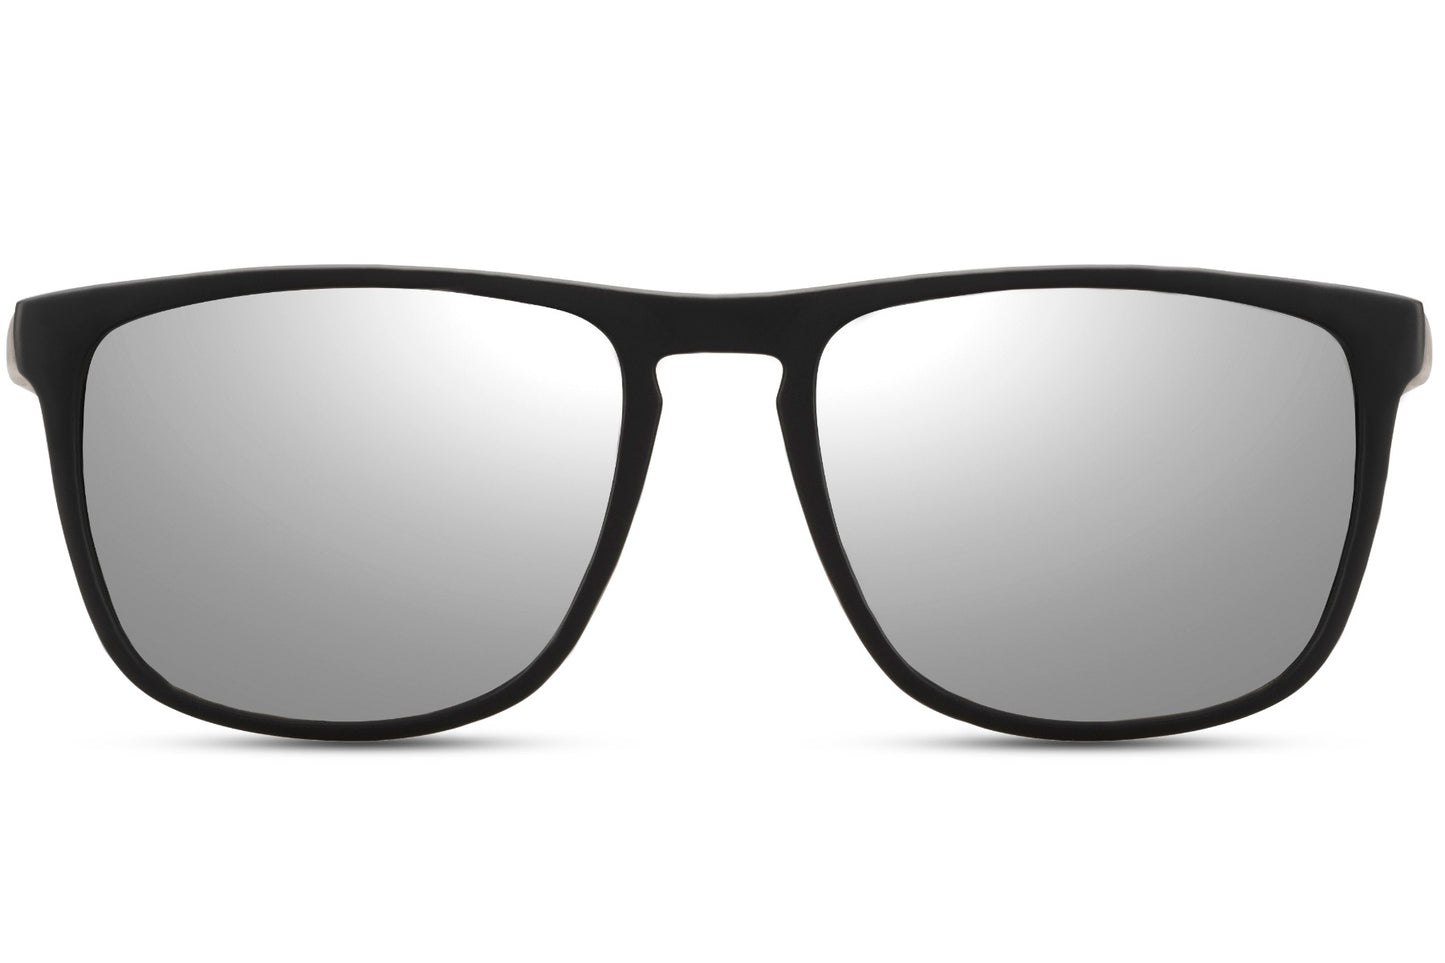 Mirrored Wayfarer Sunglasses - Eco Friendly